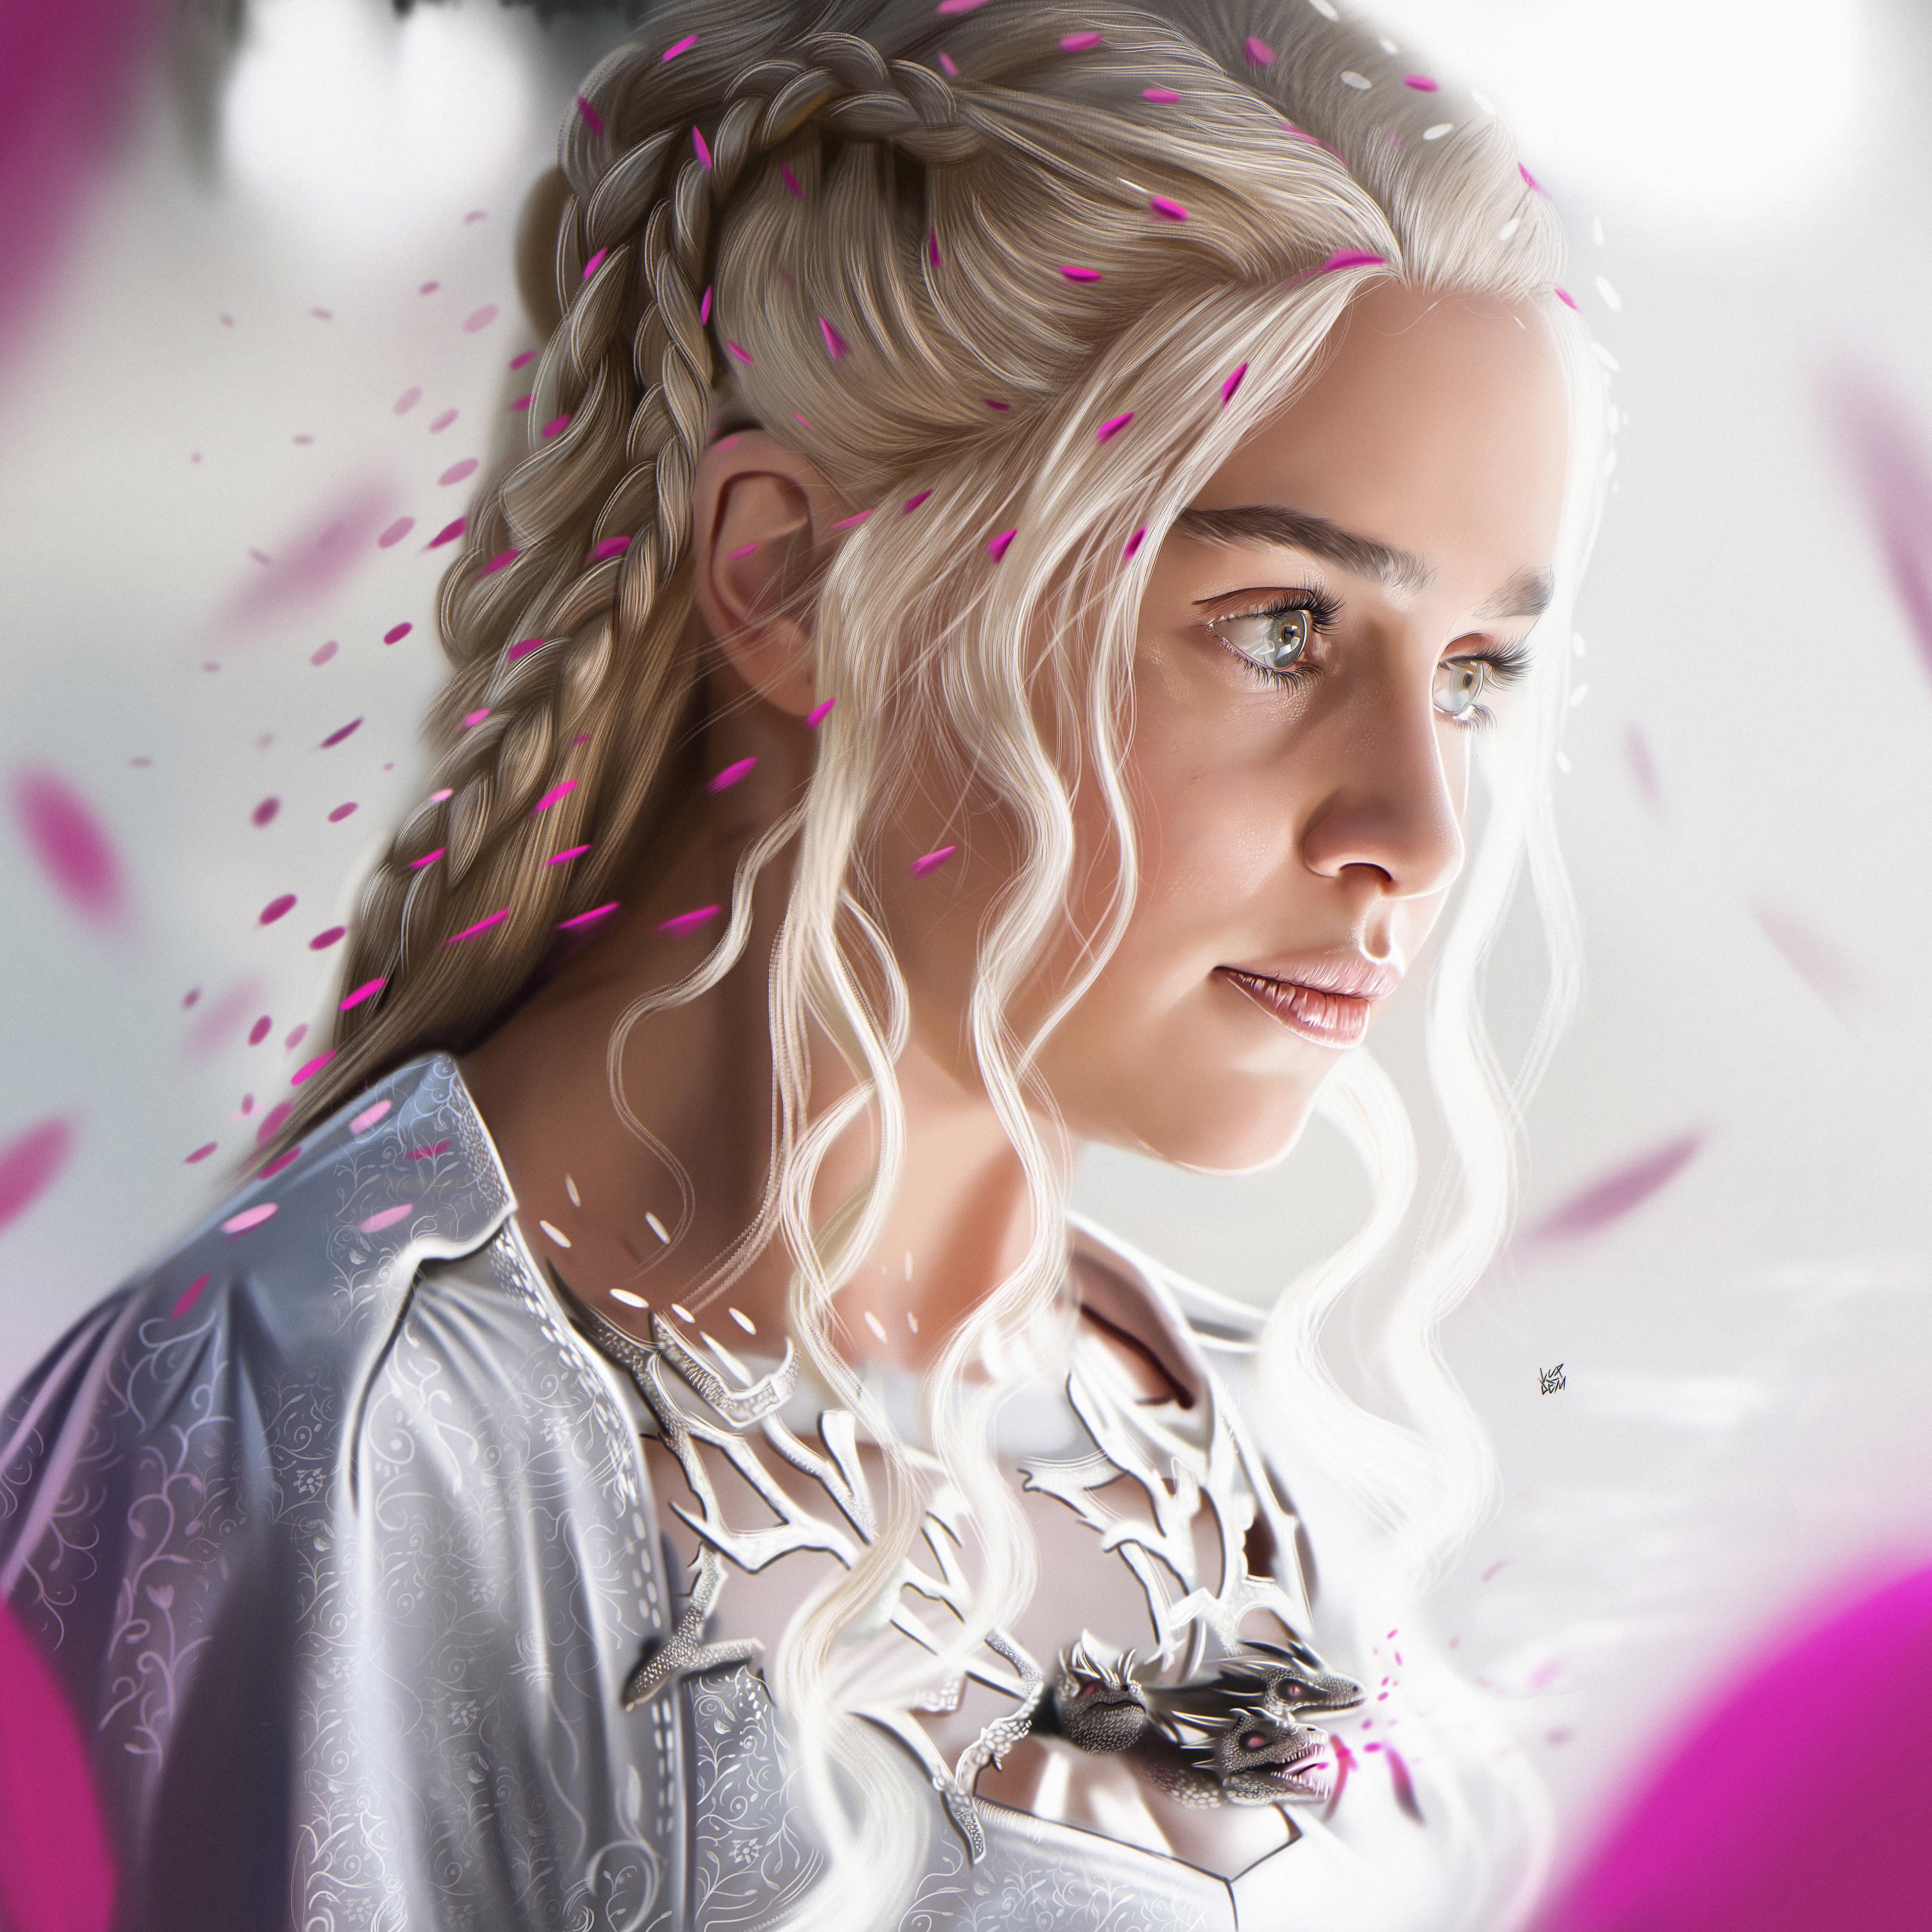 HD wallpaper, Game Of Thrones, Emilia Clarke, Daenerys Targaryen, Portrait